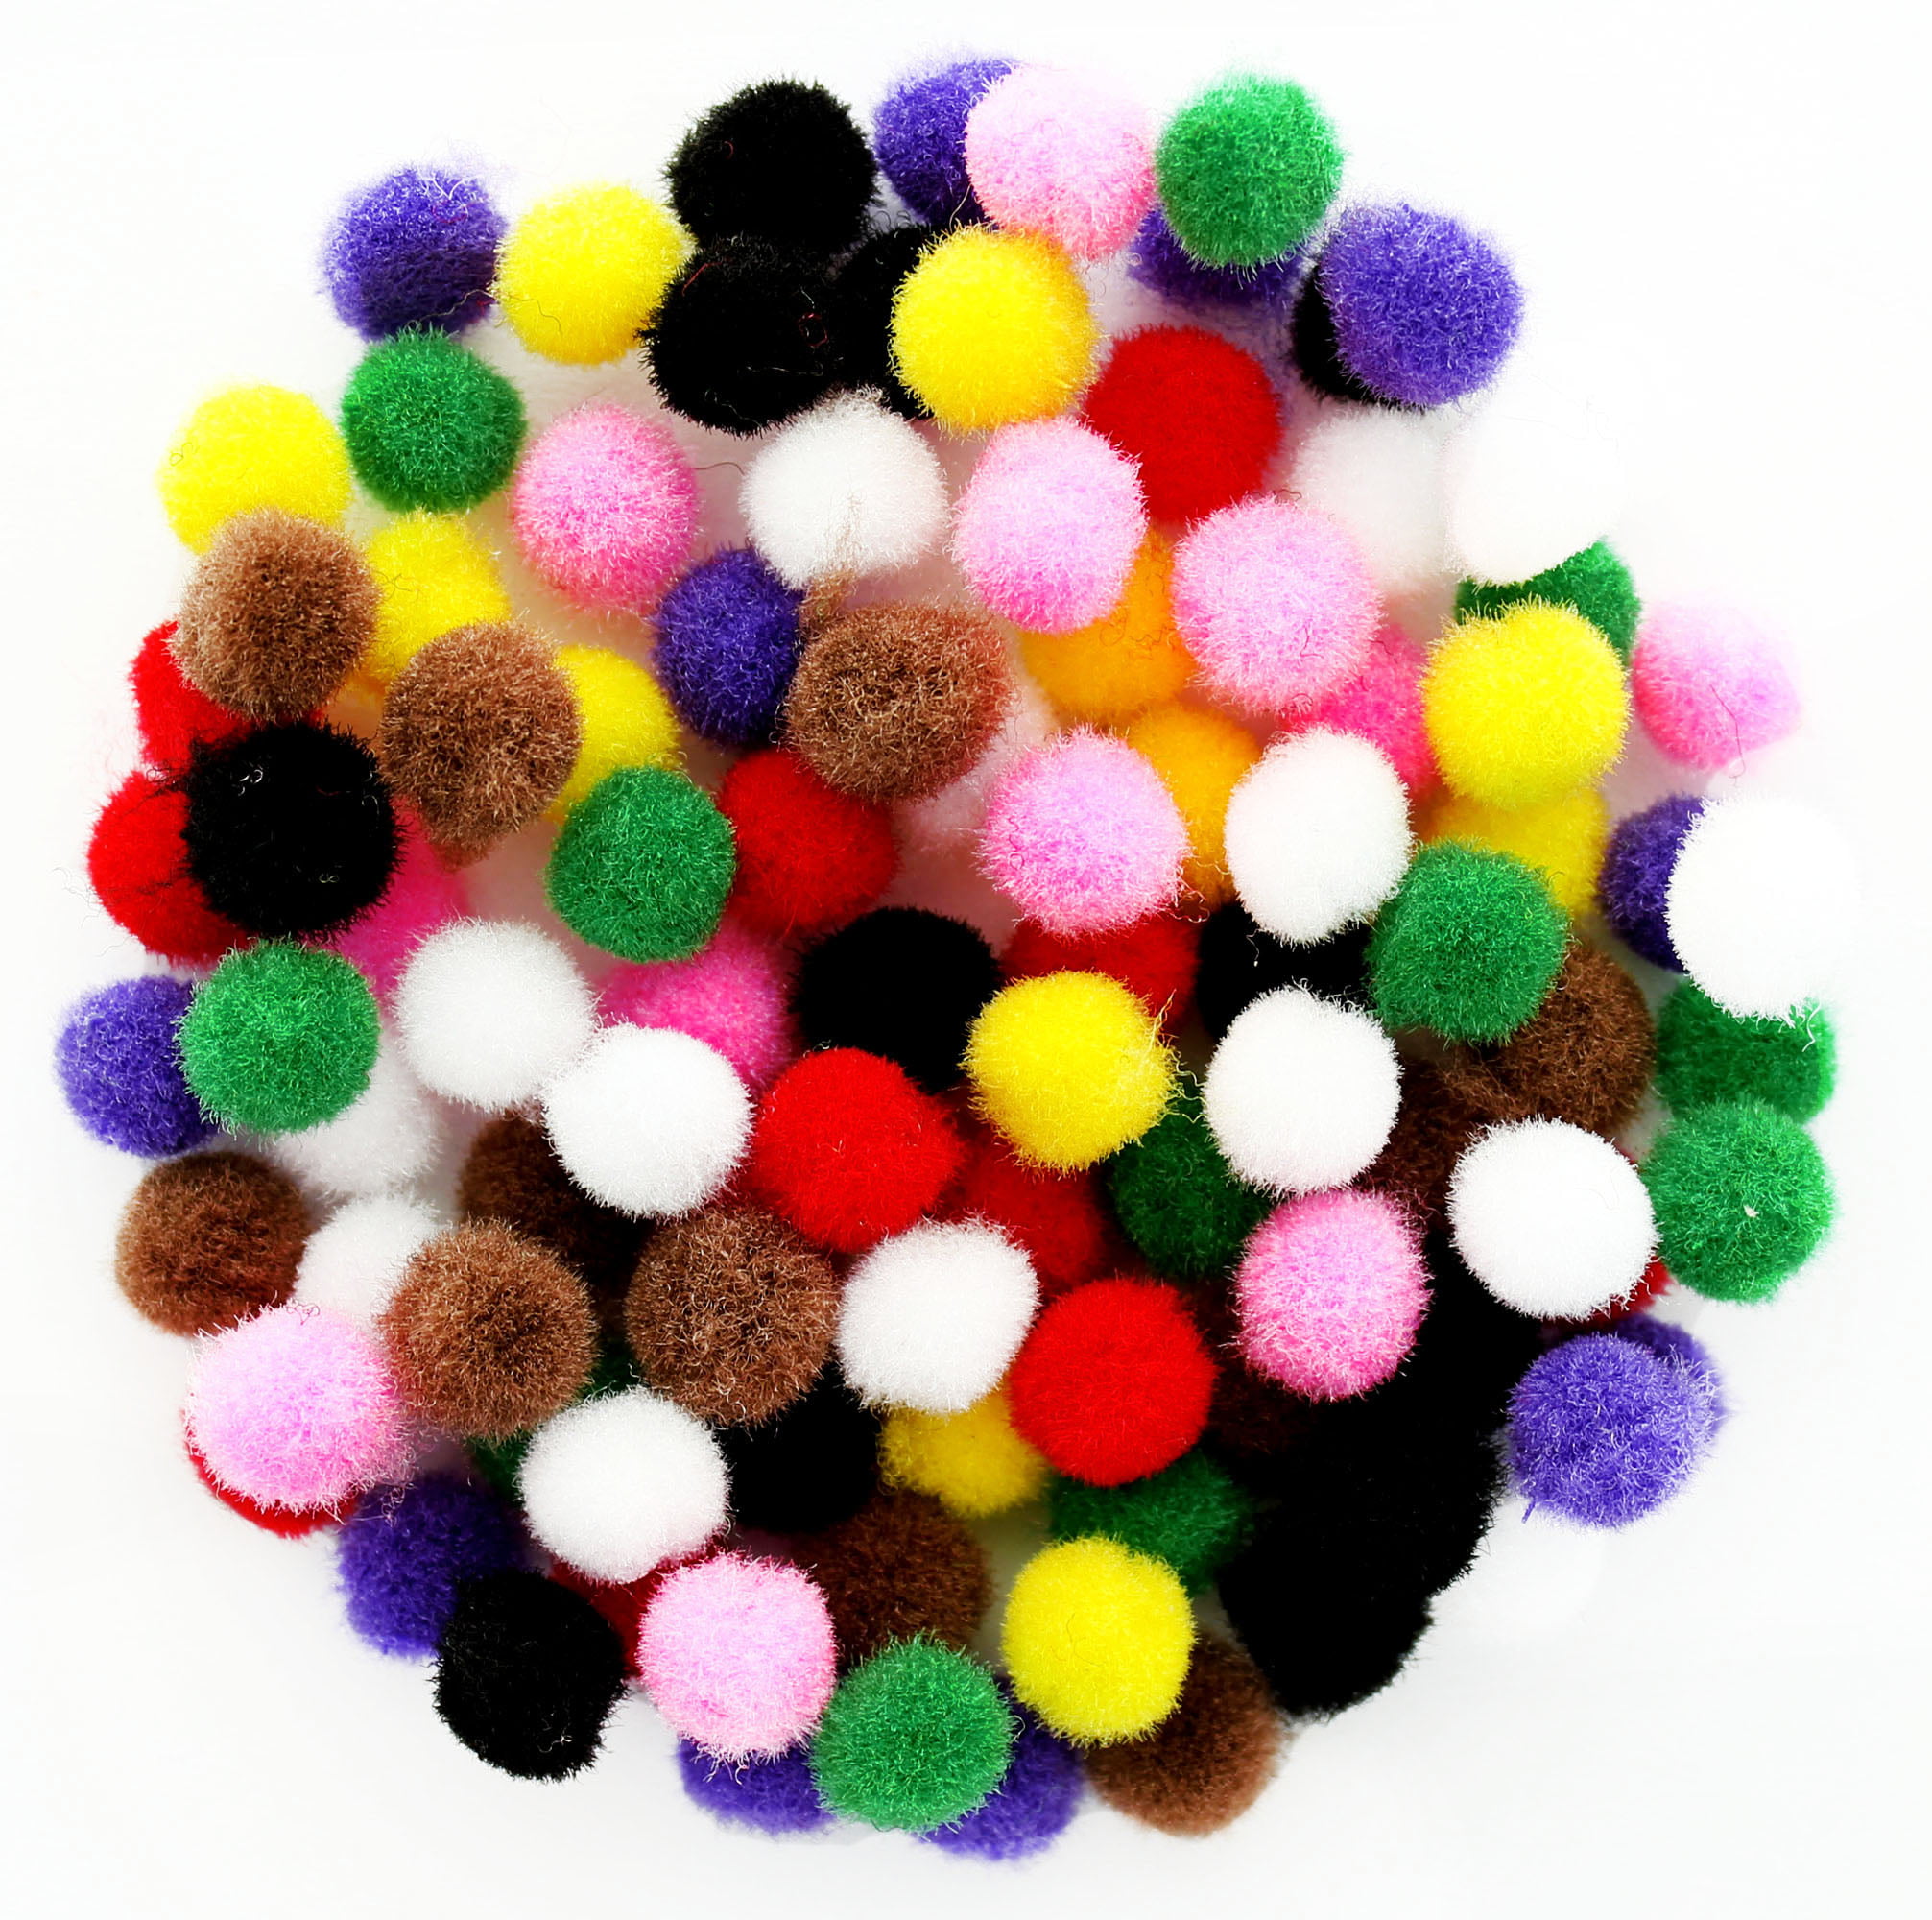 PESH-M3 - Three Color Mixed Plastic Pom Balls